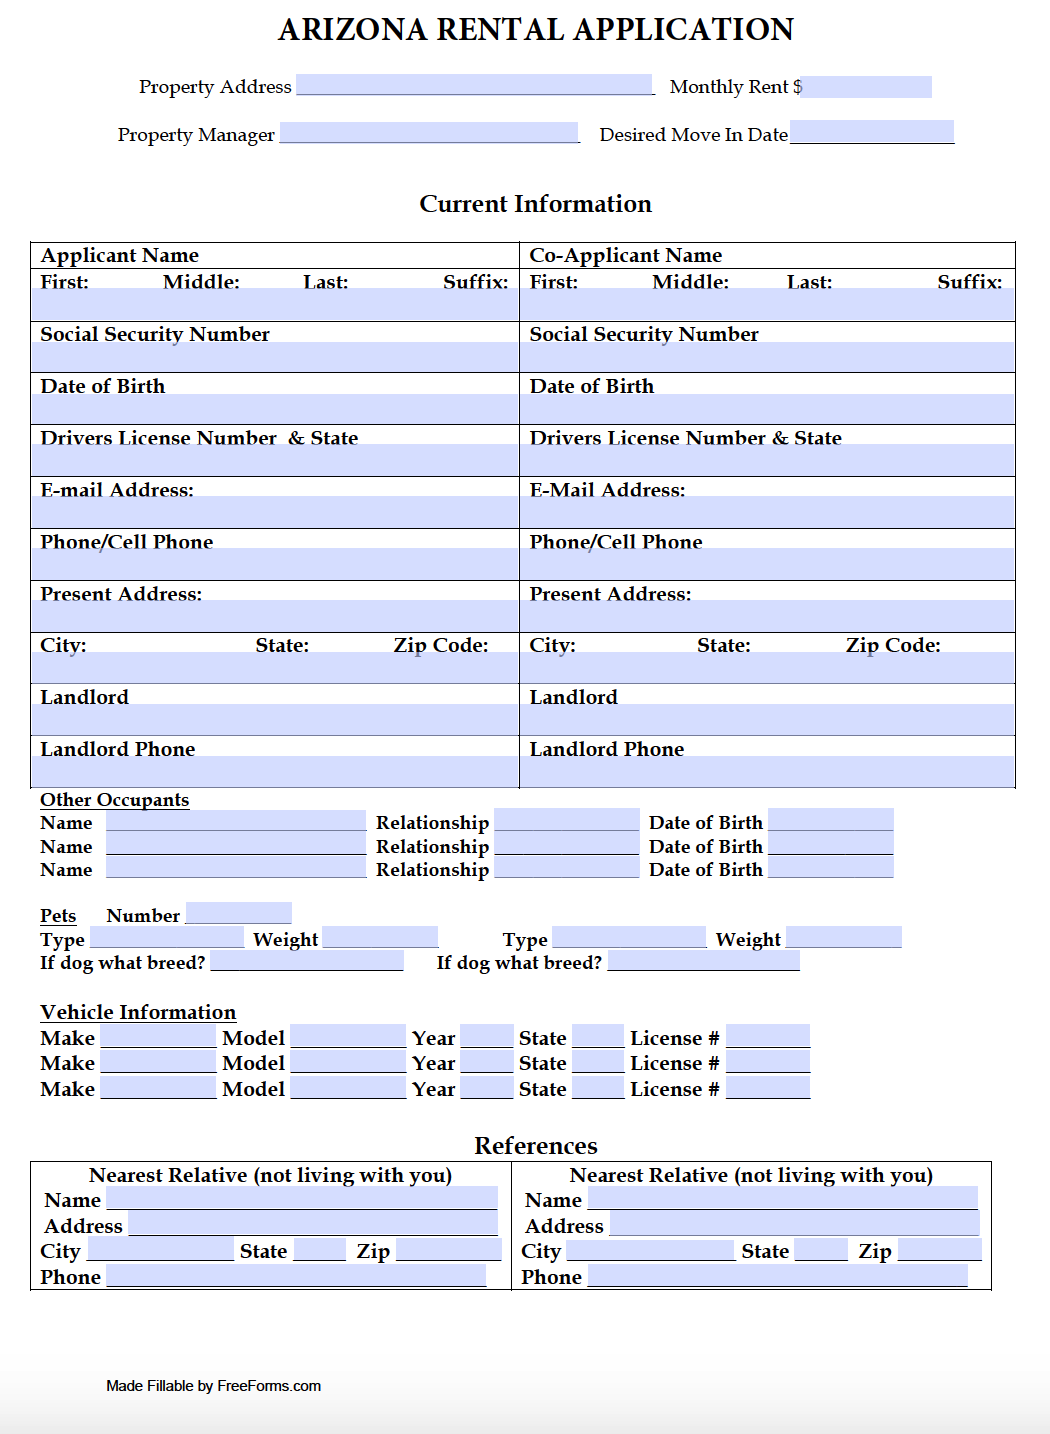 free arizona residential rental application form pdf